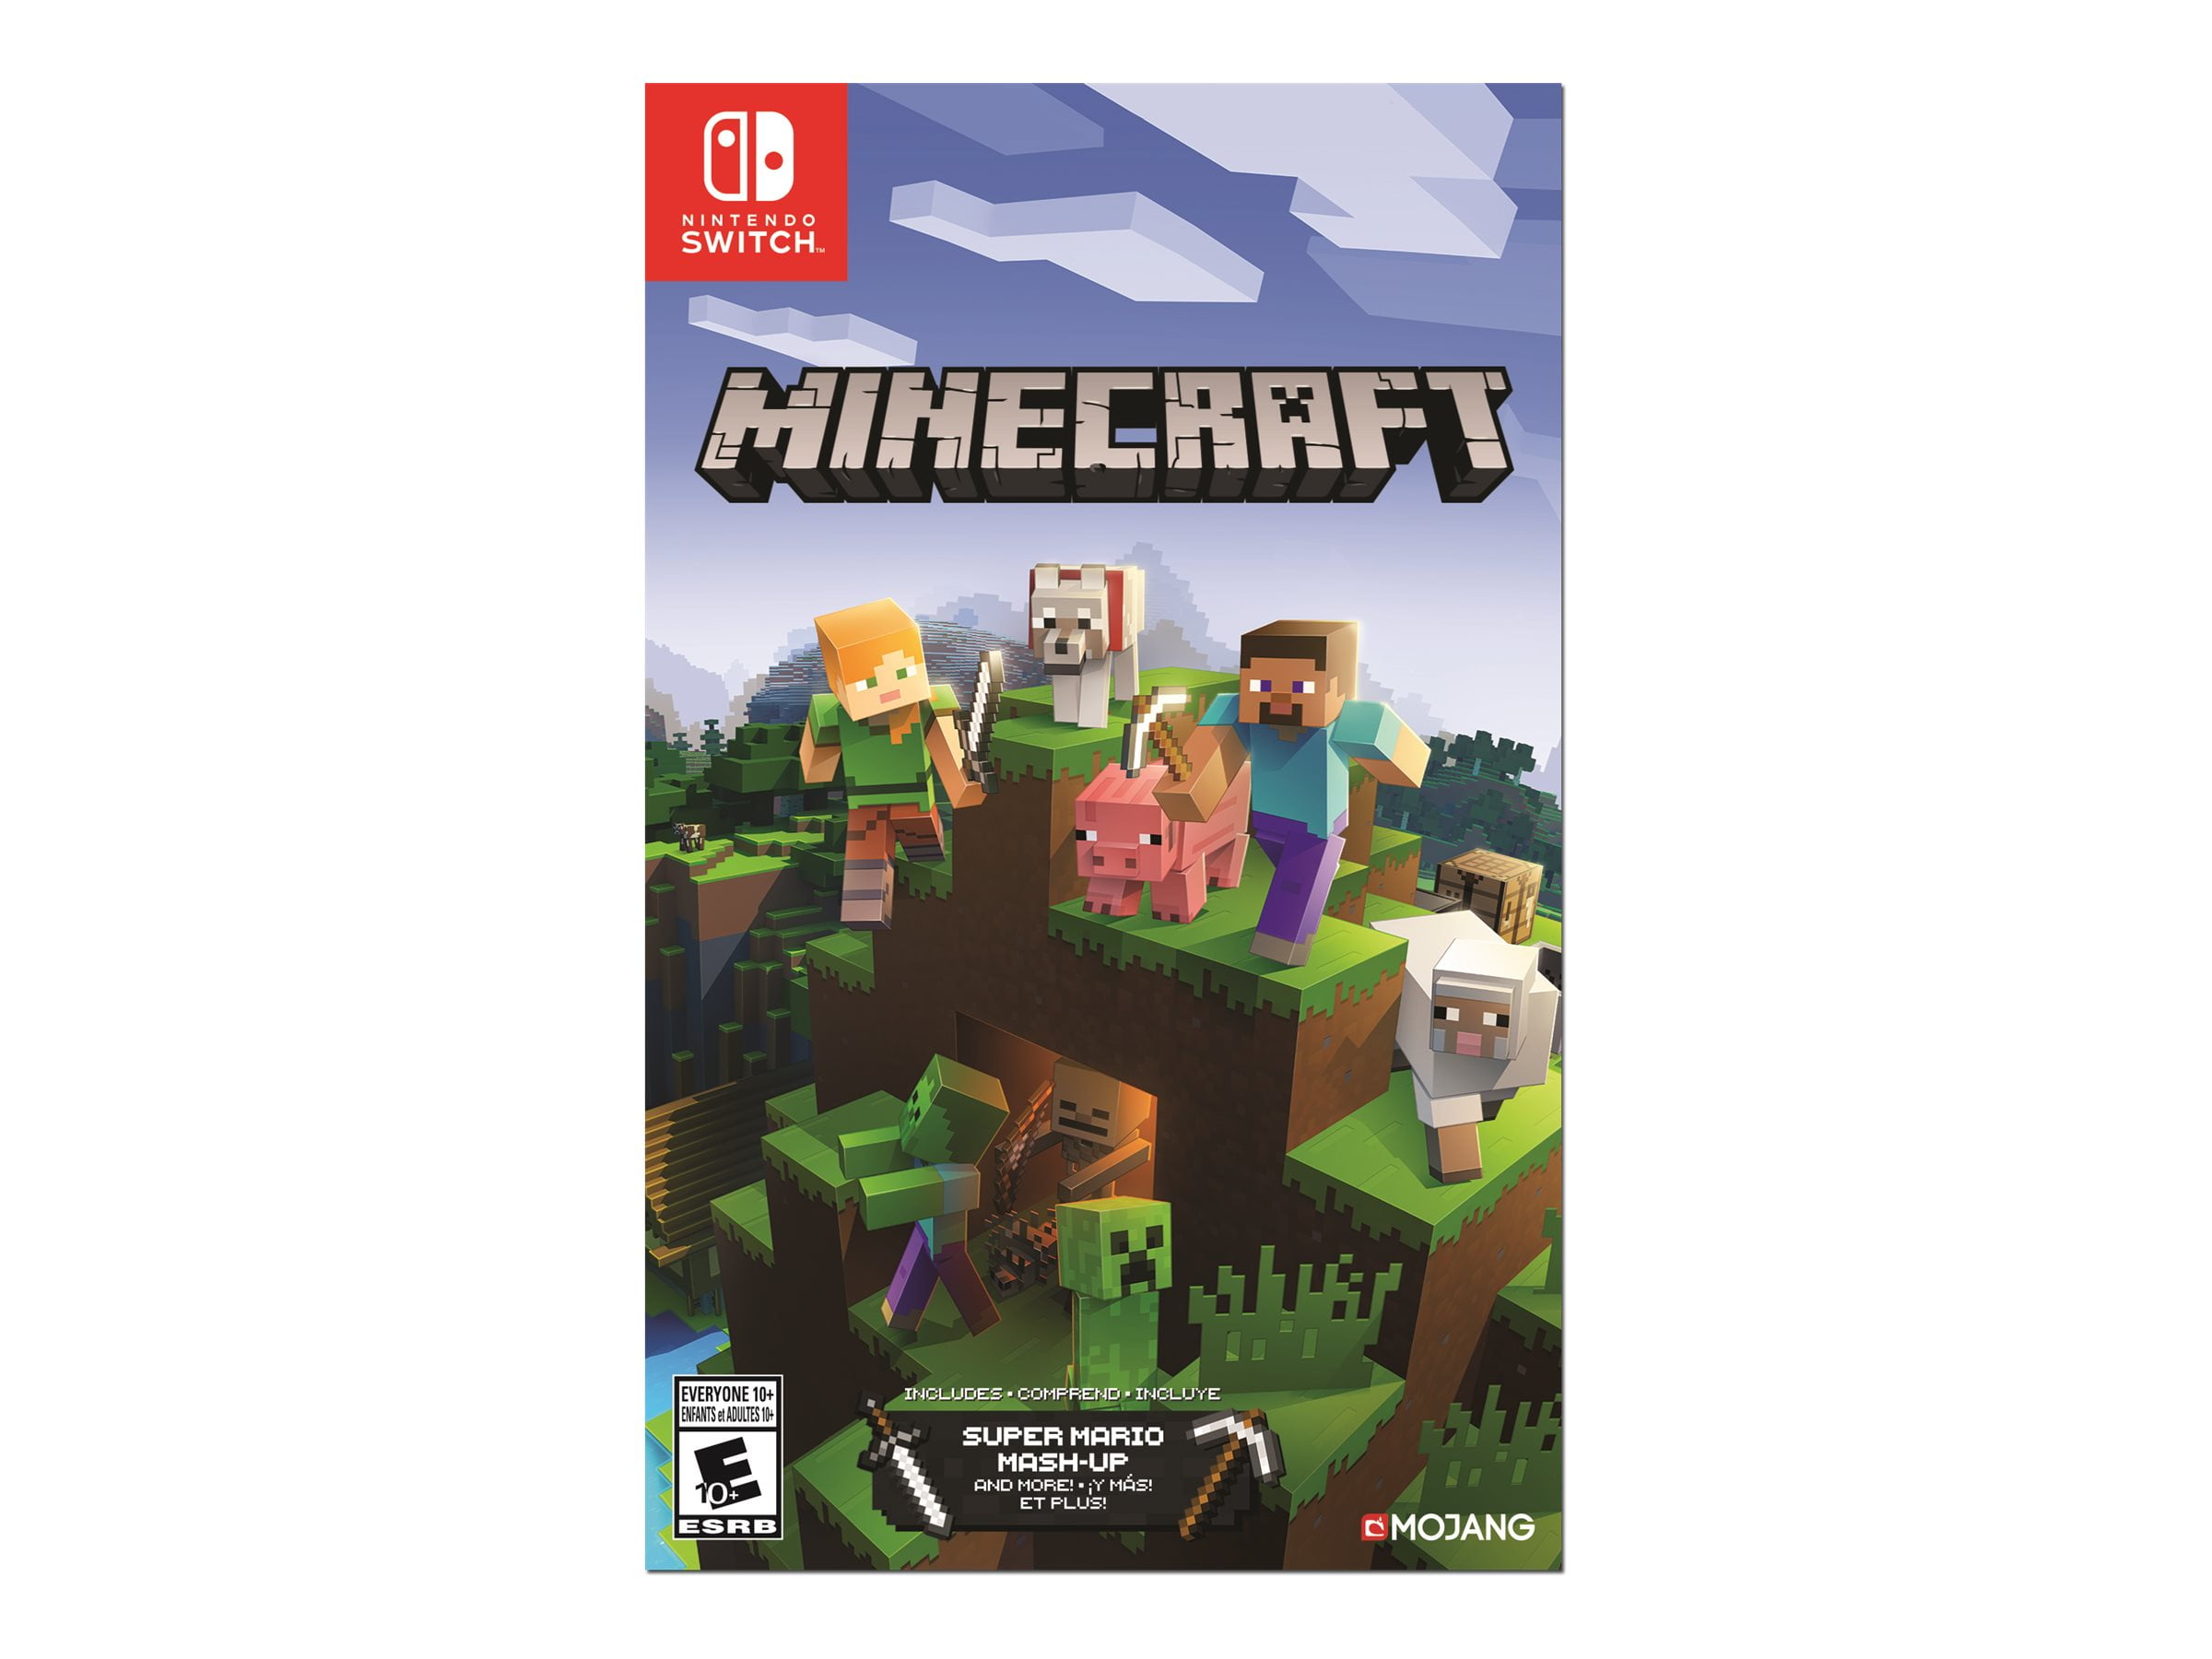 Minecraft: Story Mode Season Two Standard Edition Nintendo Switch TT02015 -  Best Buy